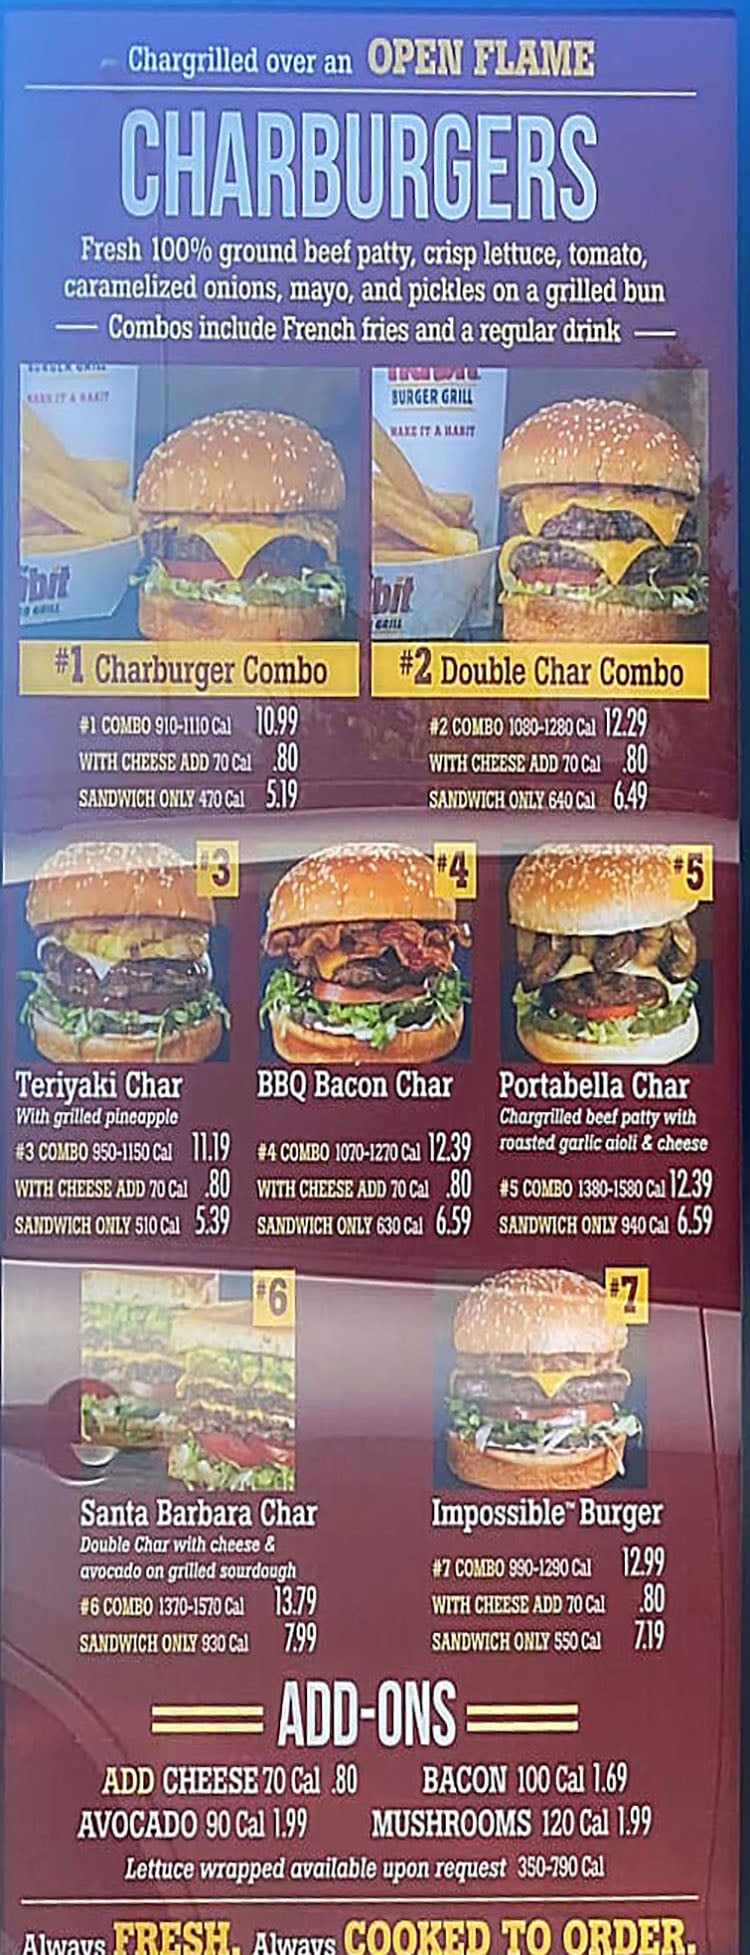 The Habit Burger Grill 2022 menu - charburgers